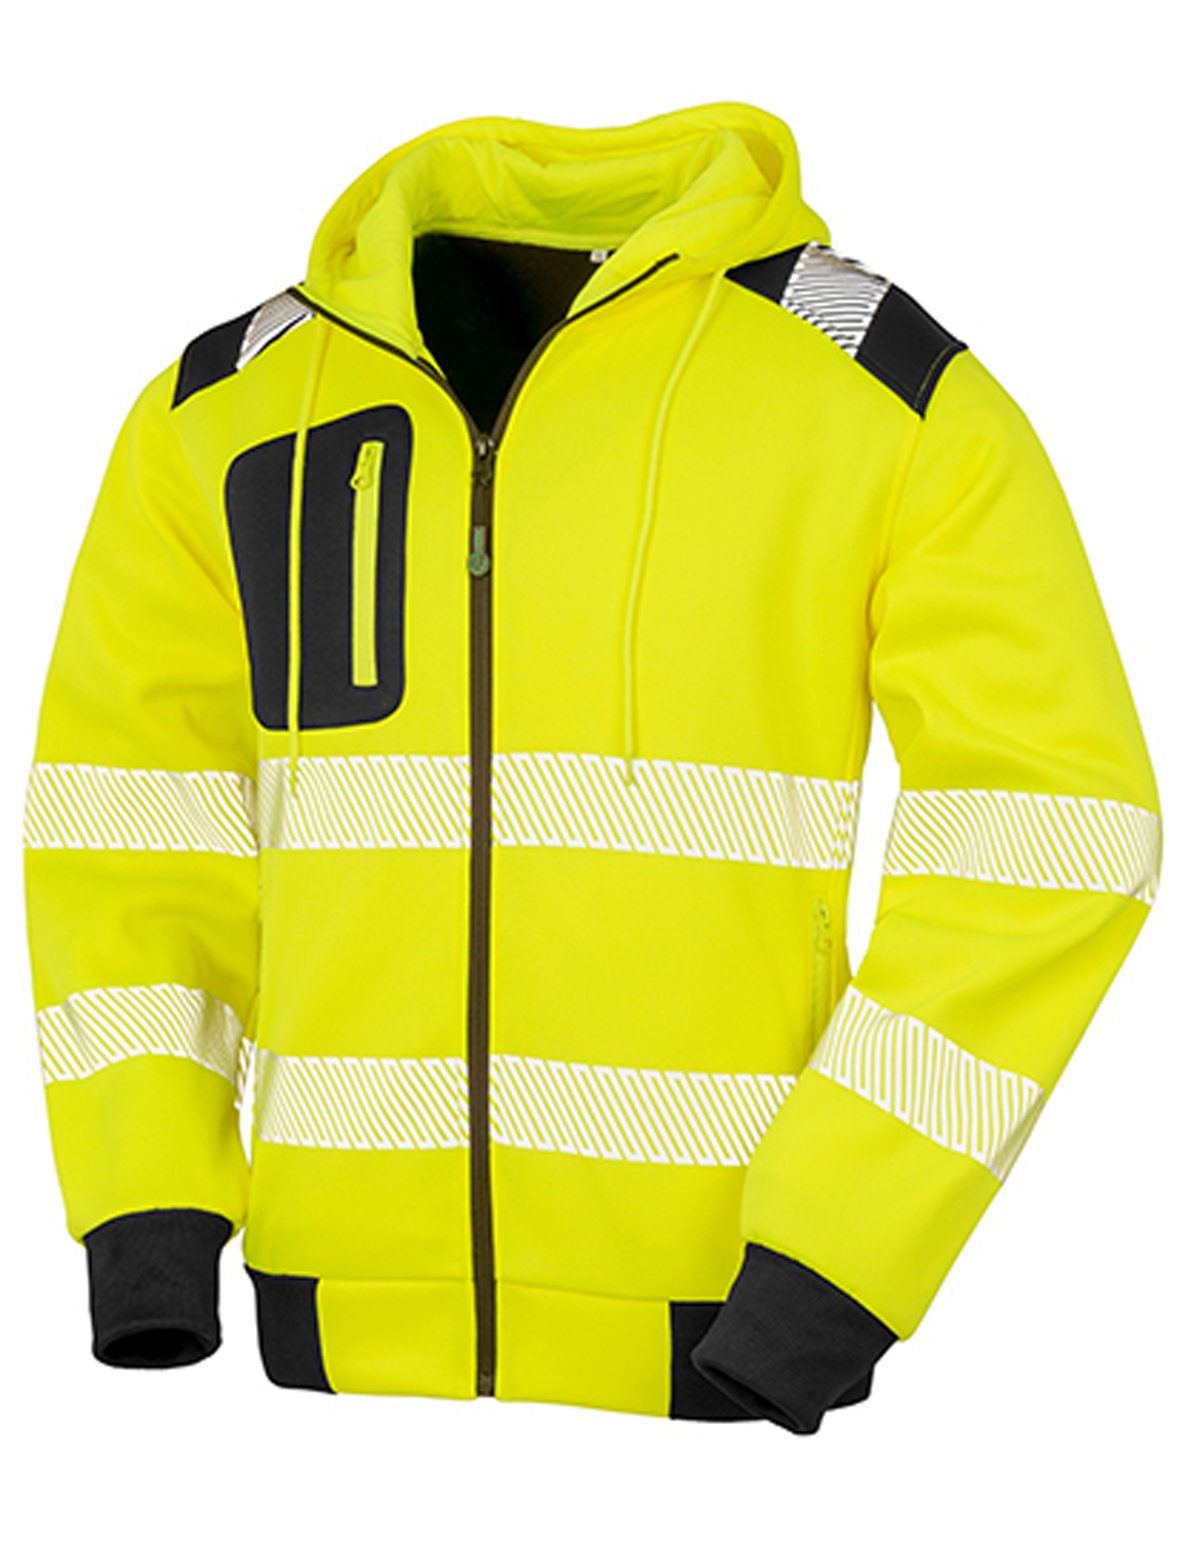 Result Arbeitsjacke Sicherheitsjacke Safety Jacke aus recyceltem Polyester atmungsaktiv RT503 Fluorescent Yellow-Black